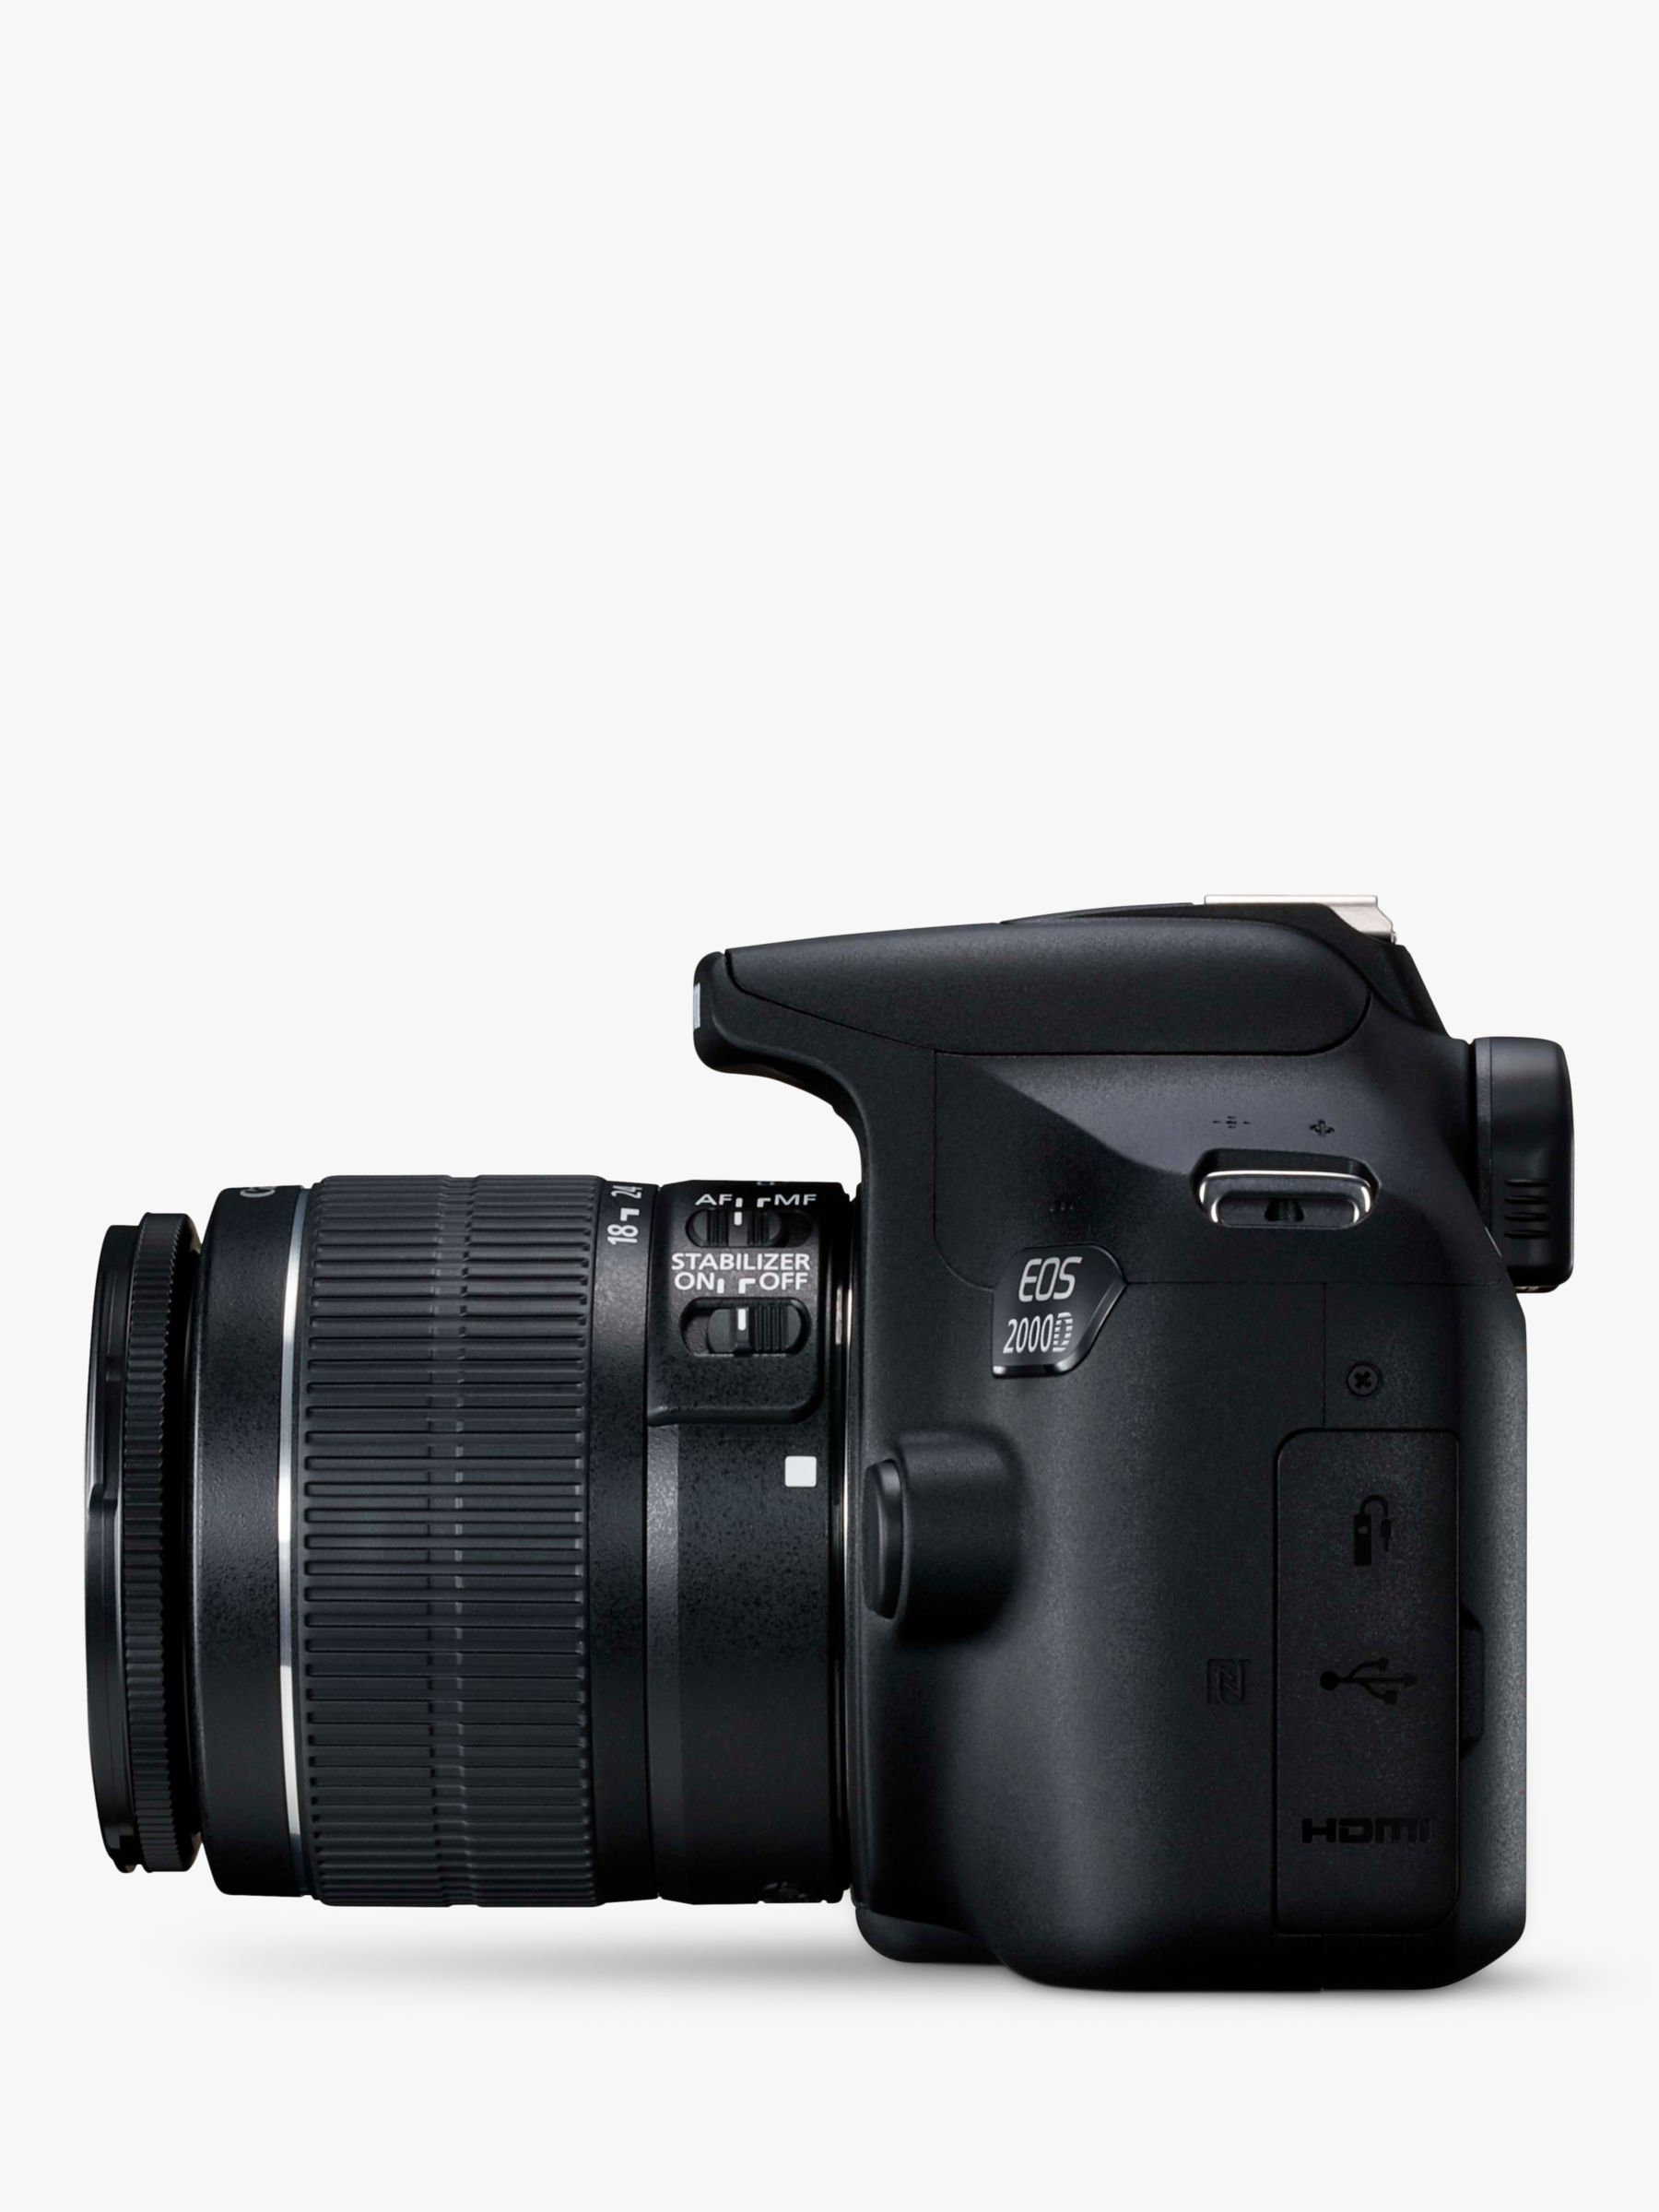 Canon EOS 2000D Digital SLR Camera with 18-55mm Lens & 50mm Lens, 1080p  Full HD